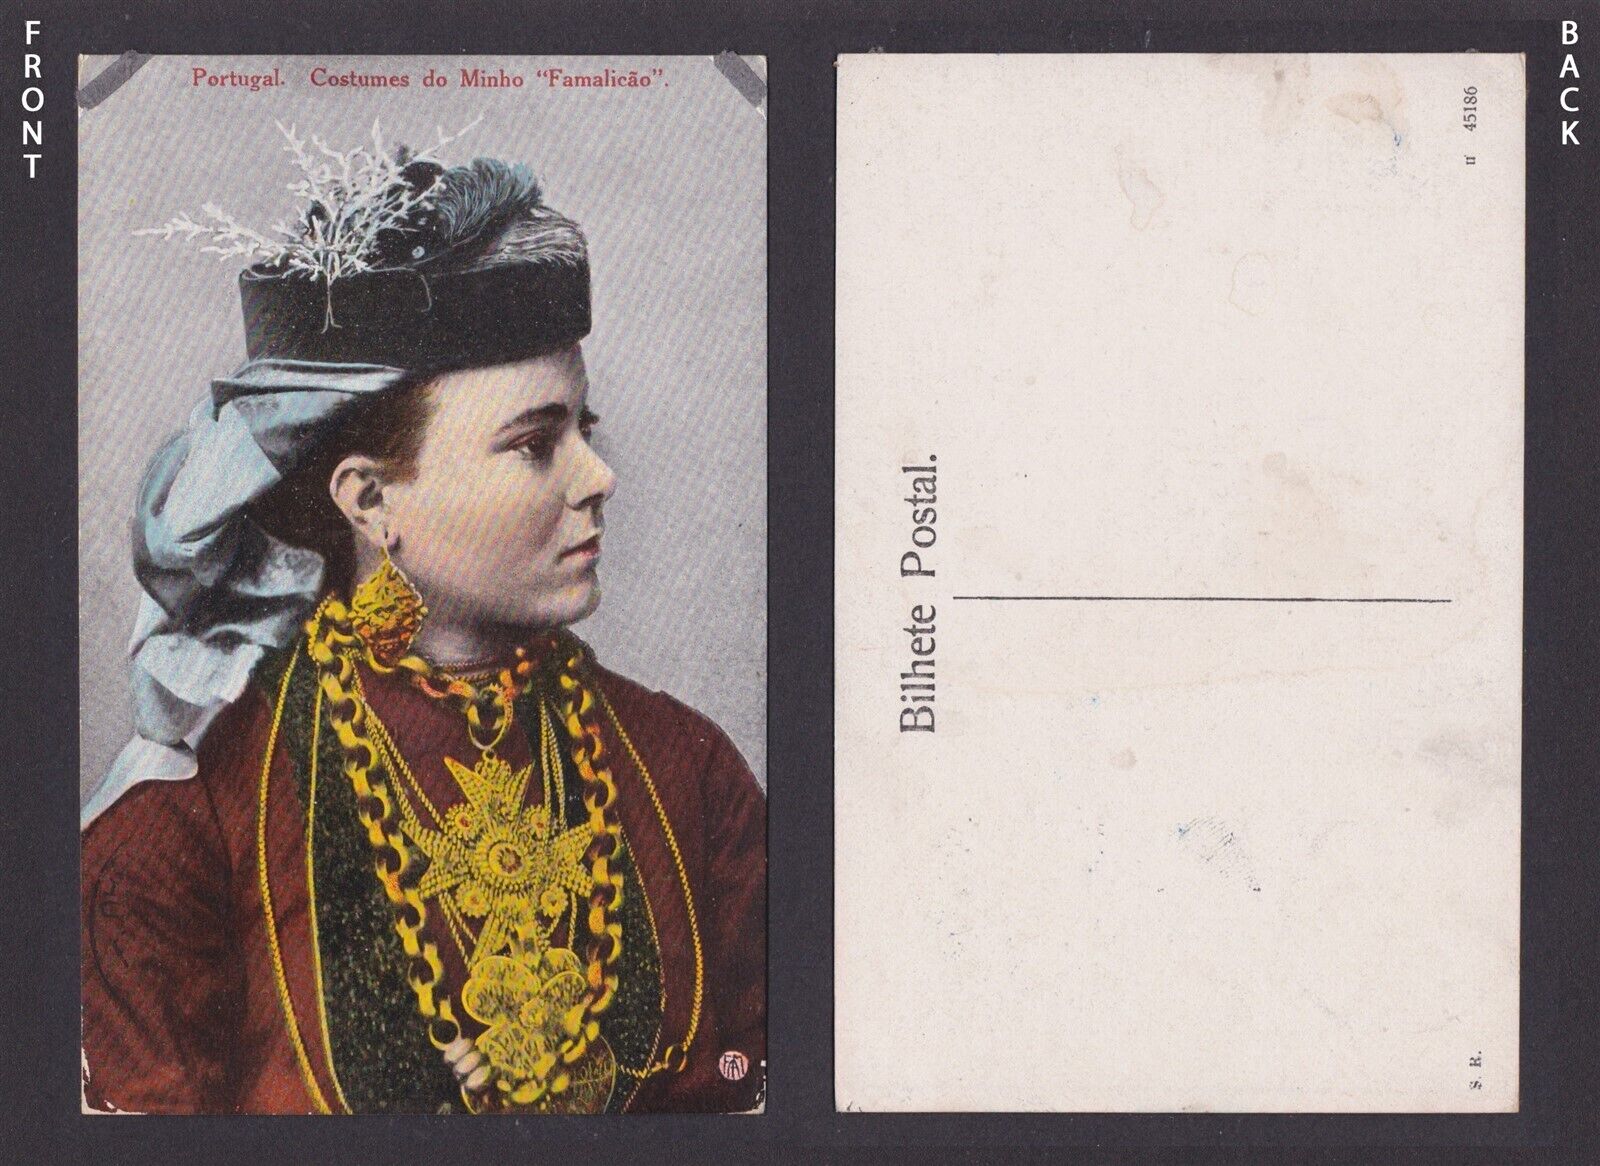 Vintage postcard, National costume, Portugal, Costumes of Minho